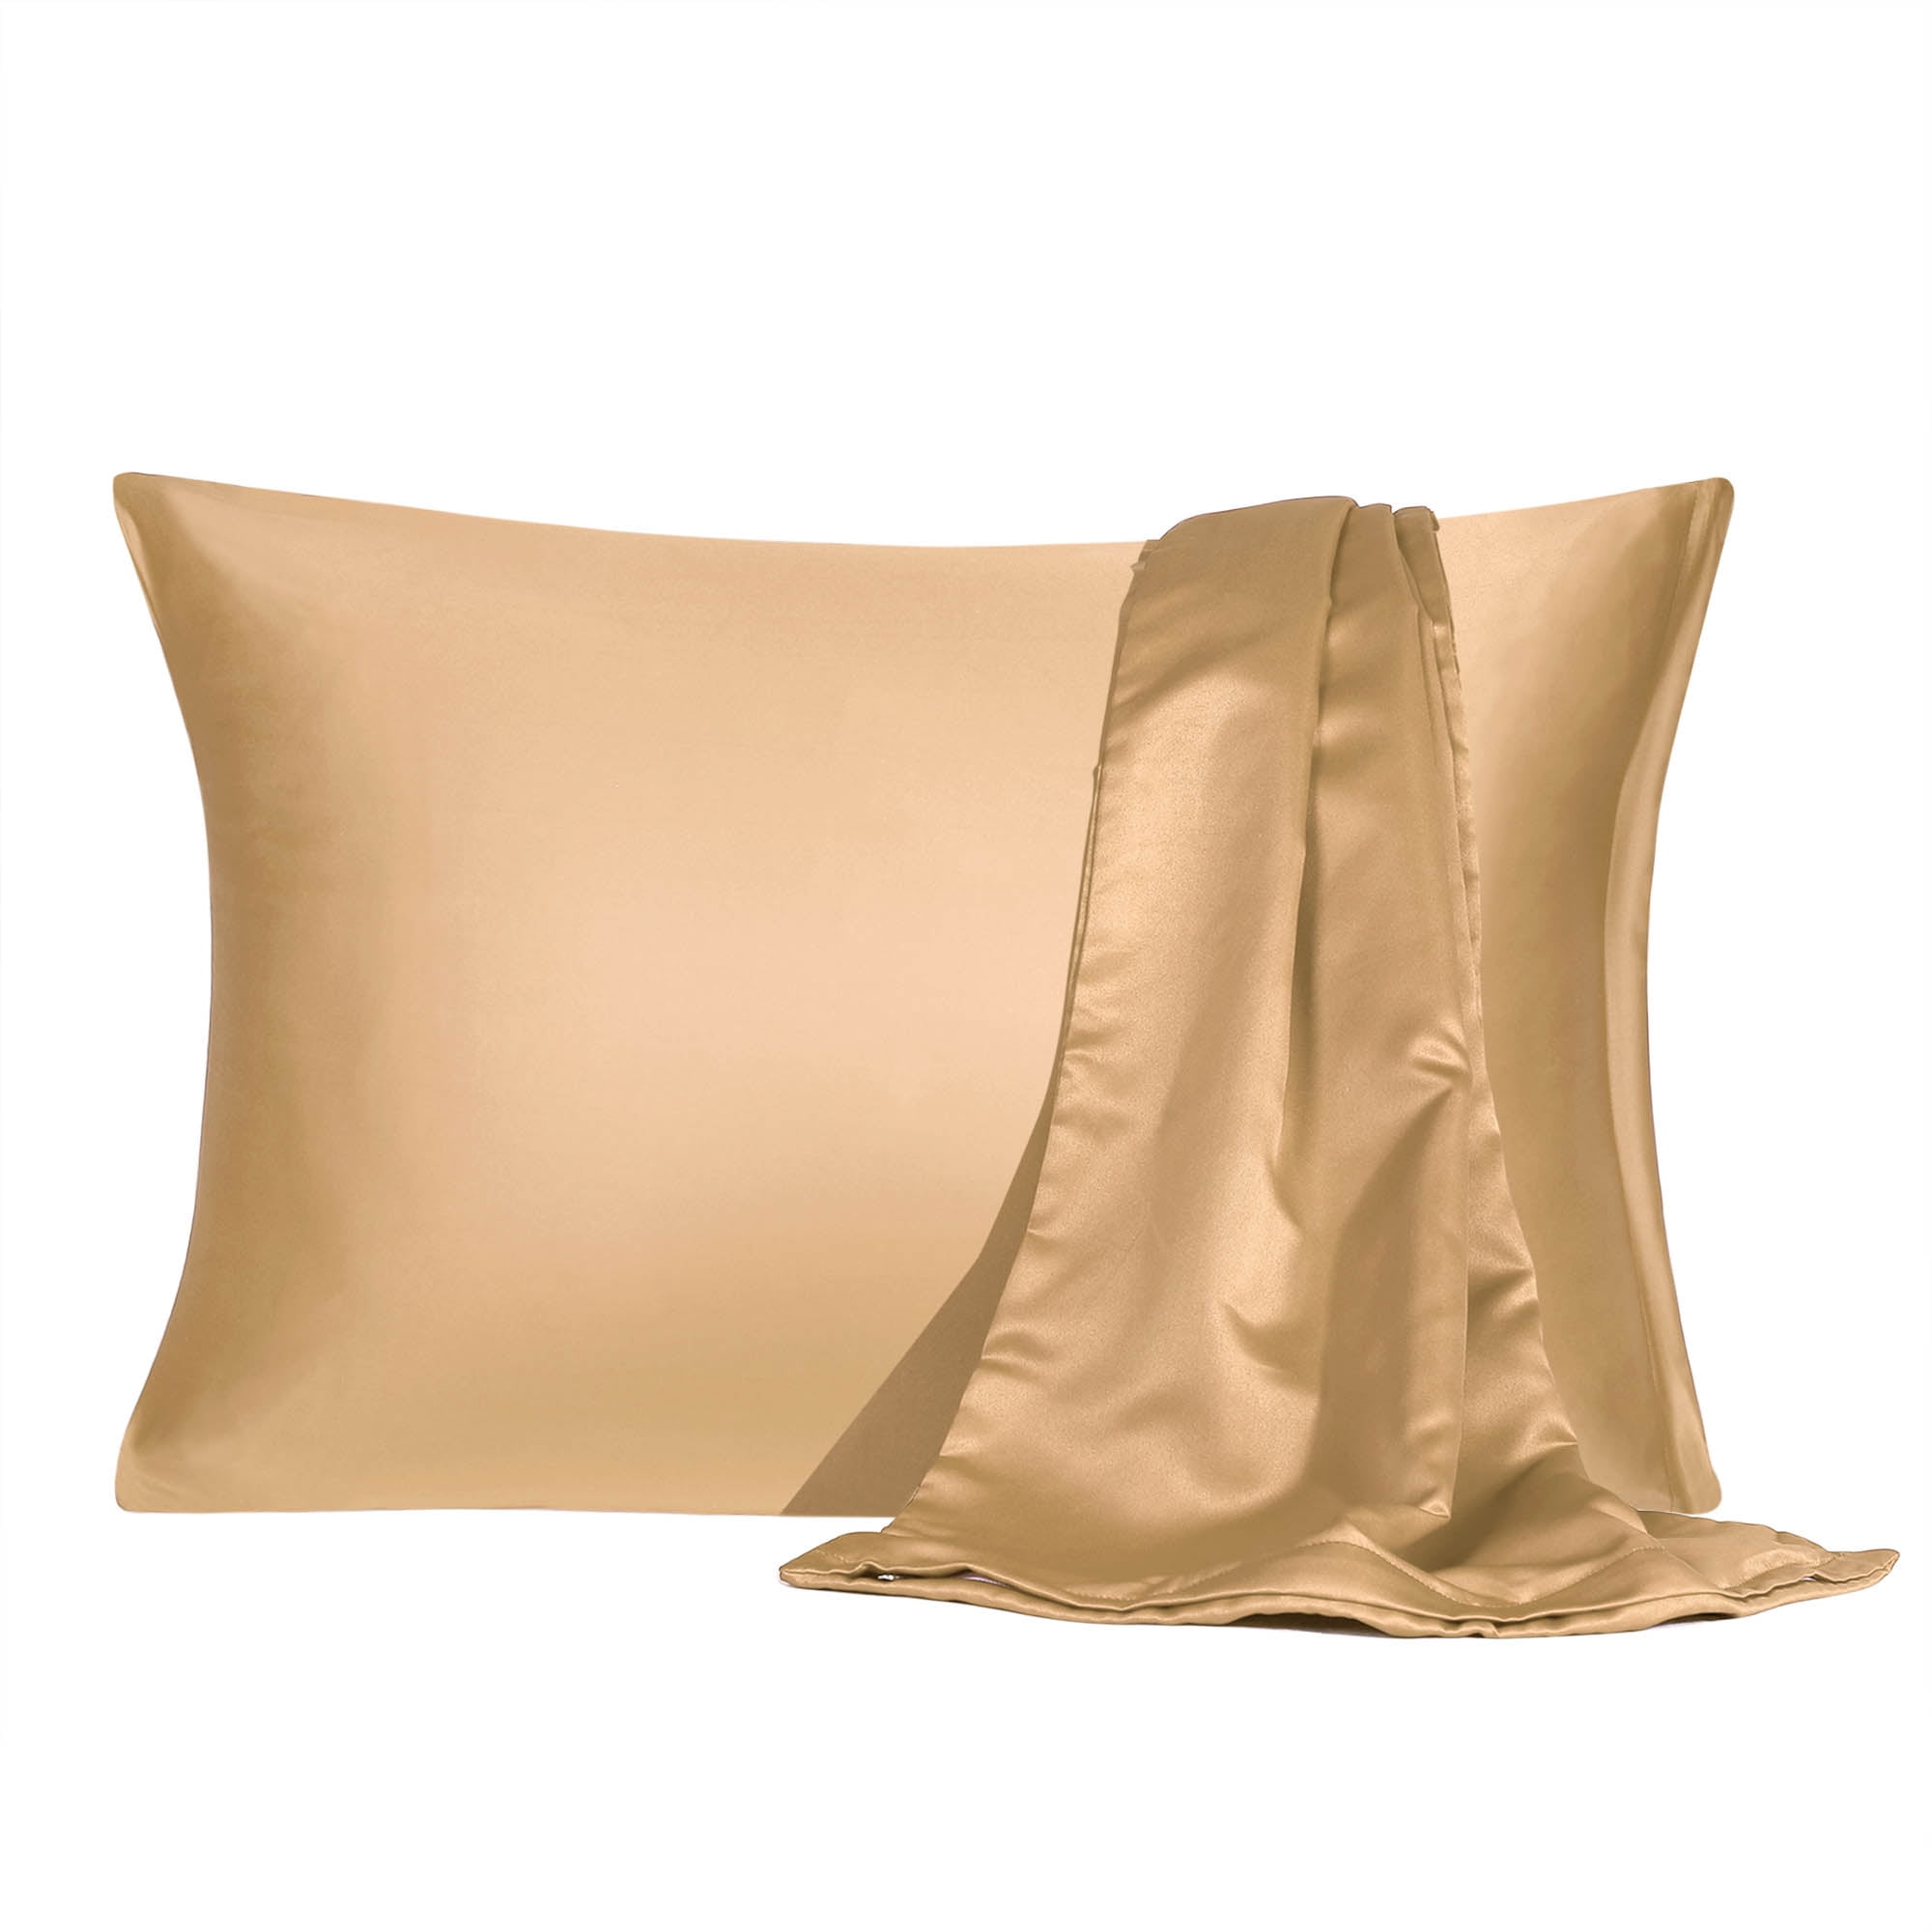 rose gold satin pillowcase